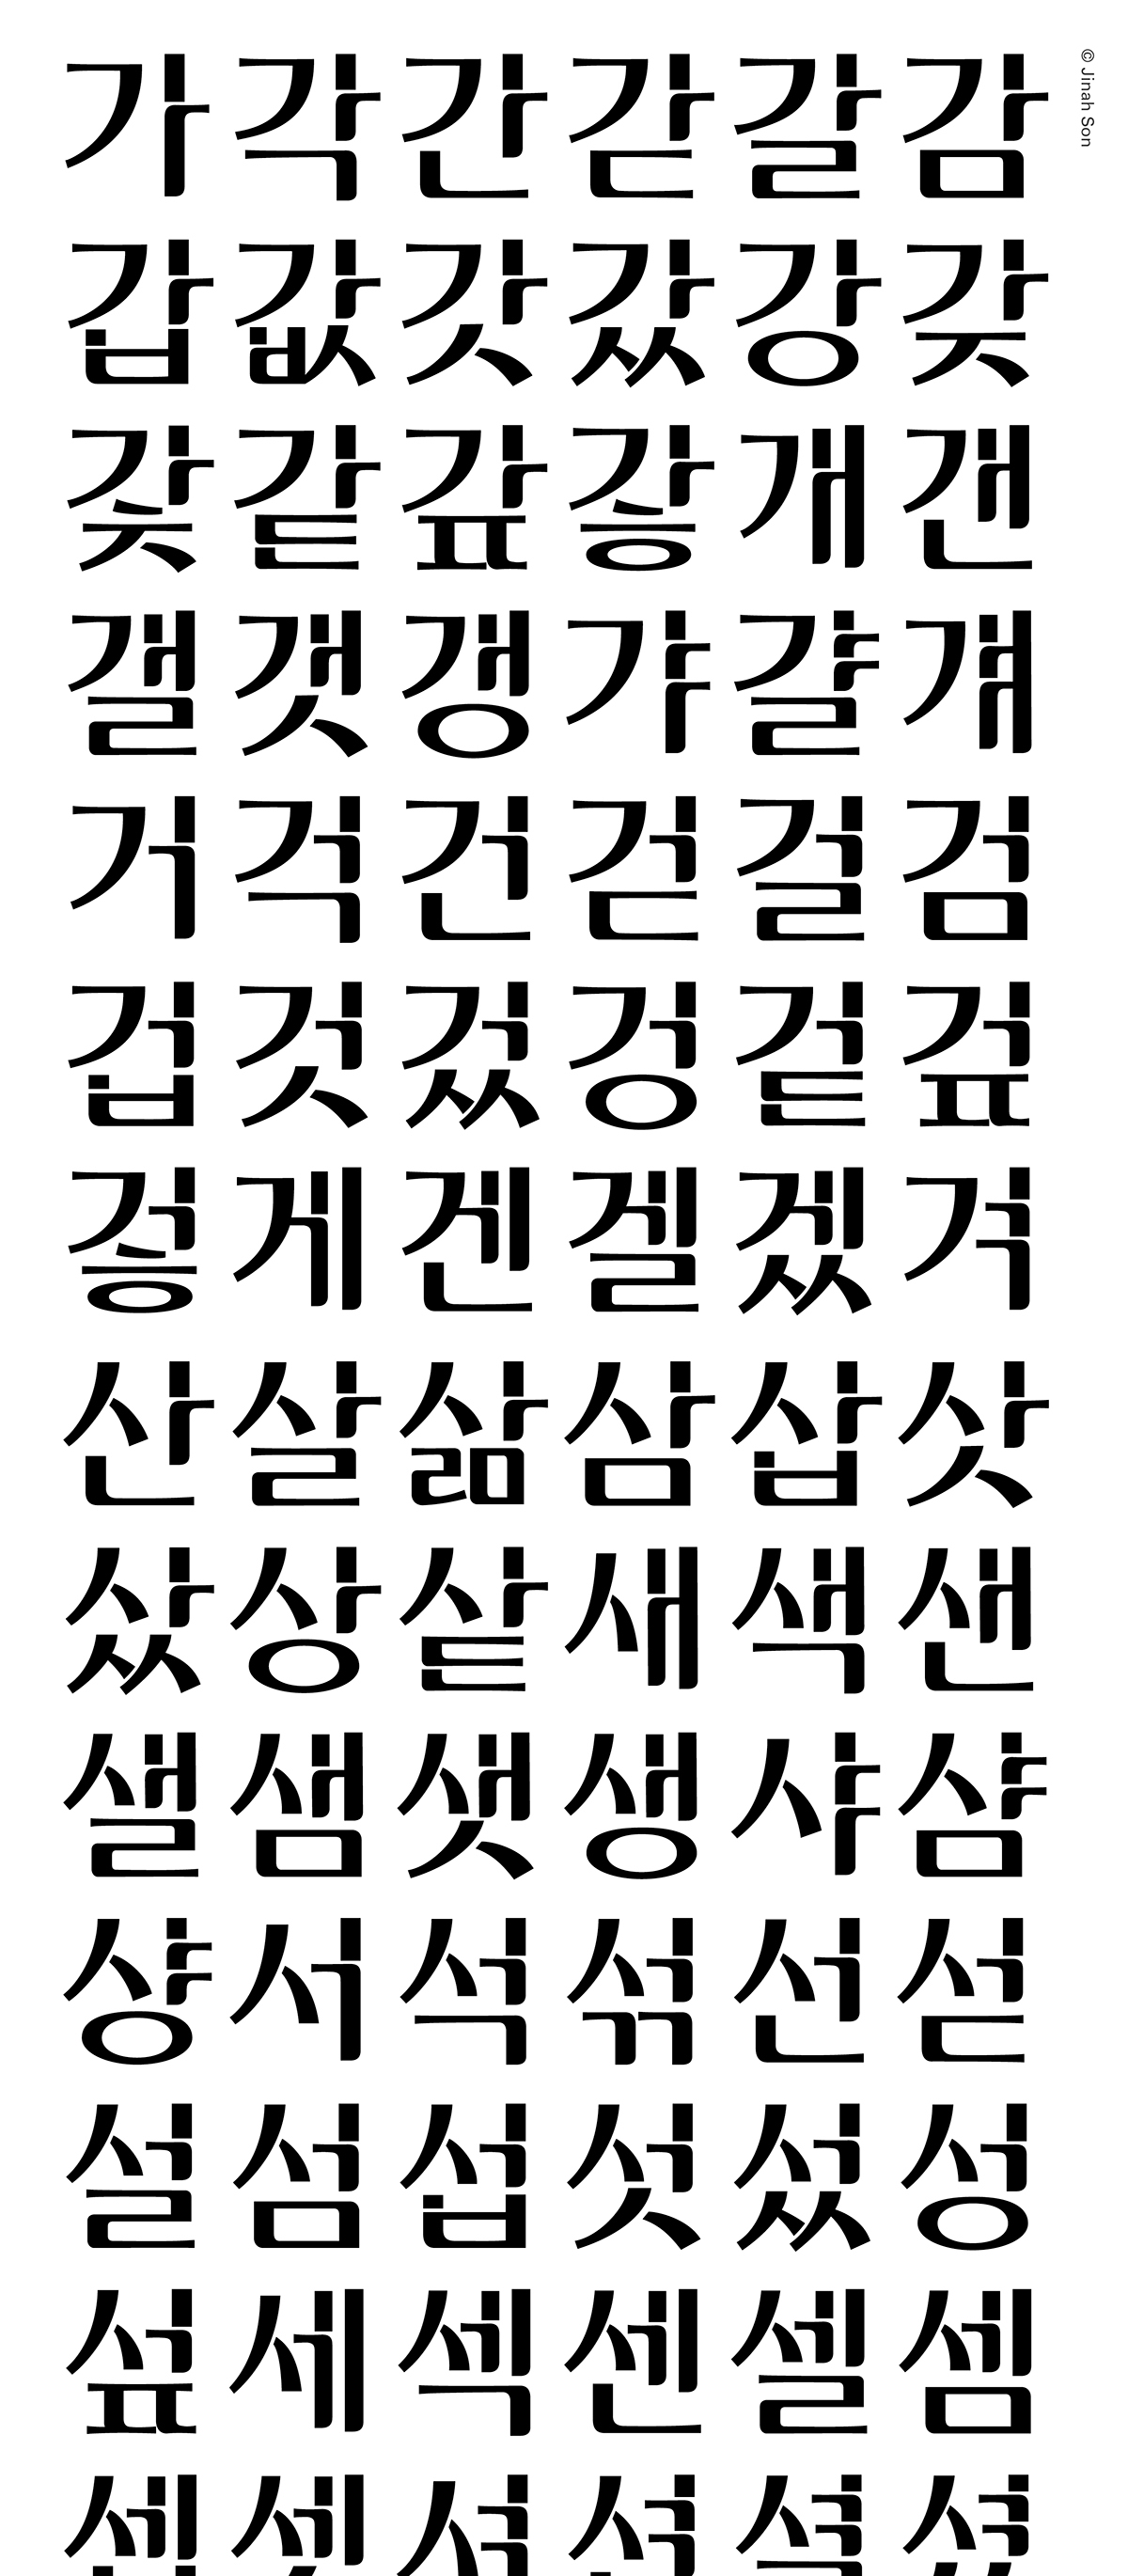 type design korean Hangul Typeface